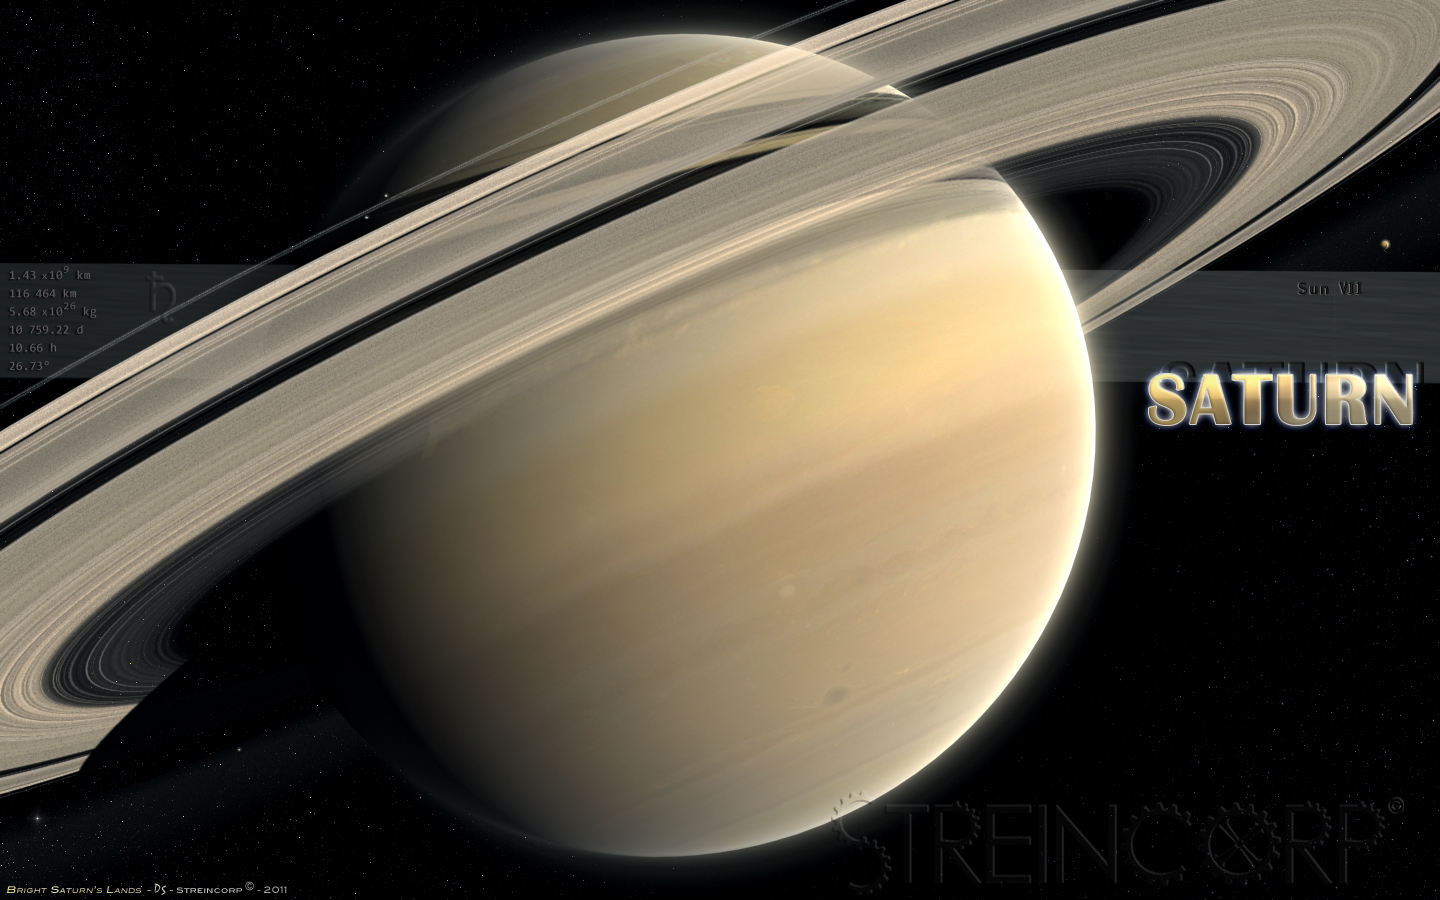 Bright Saturn's Lands